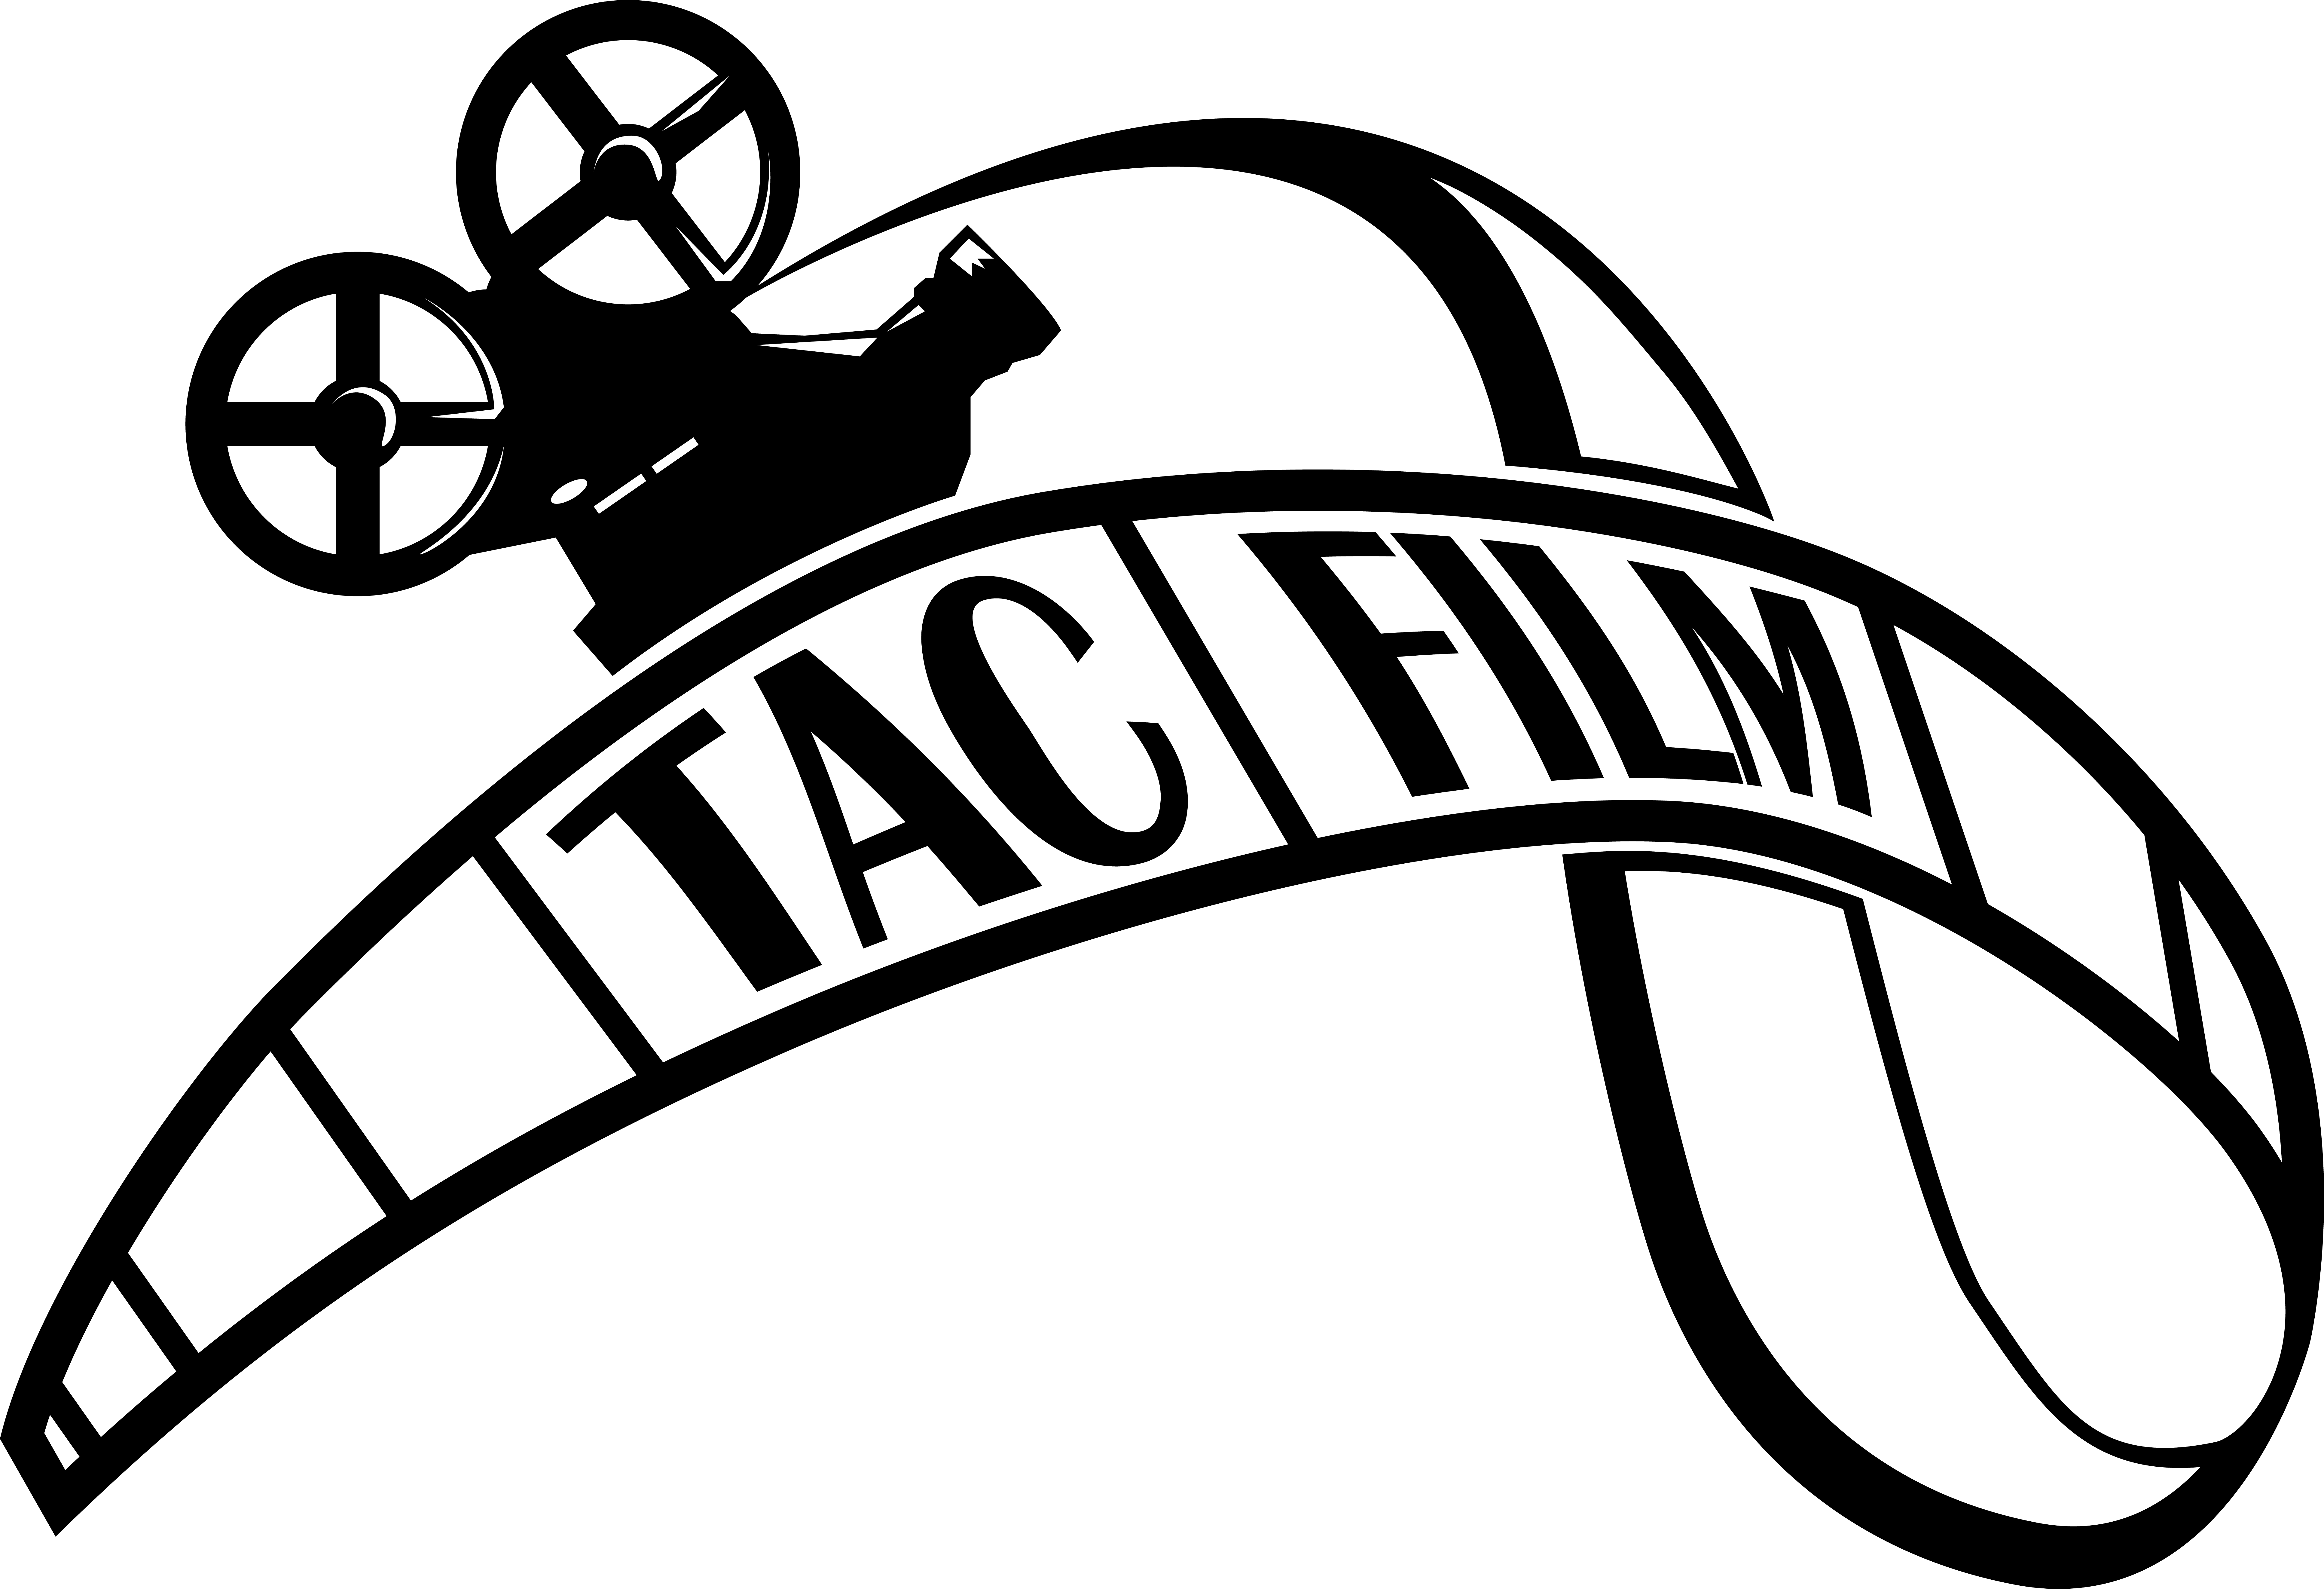 TAC Film Screening | MyAUC